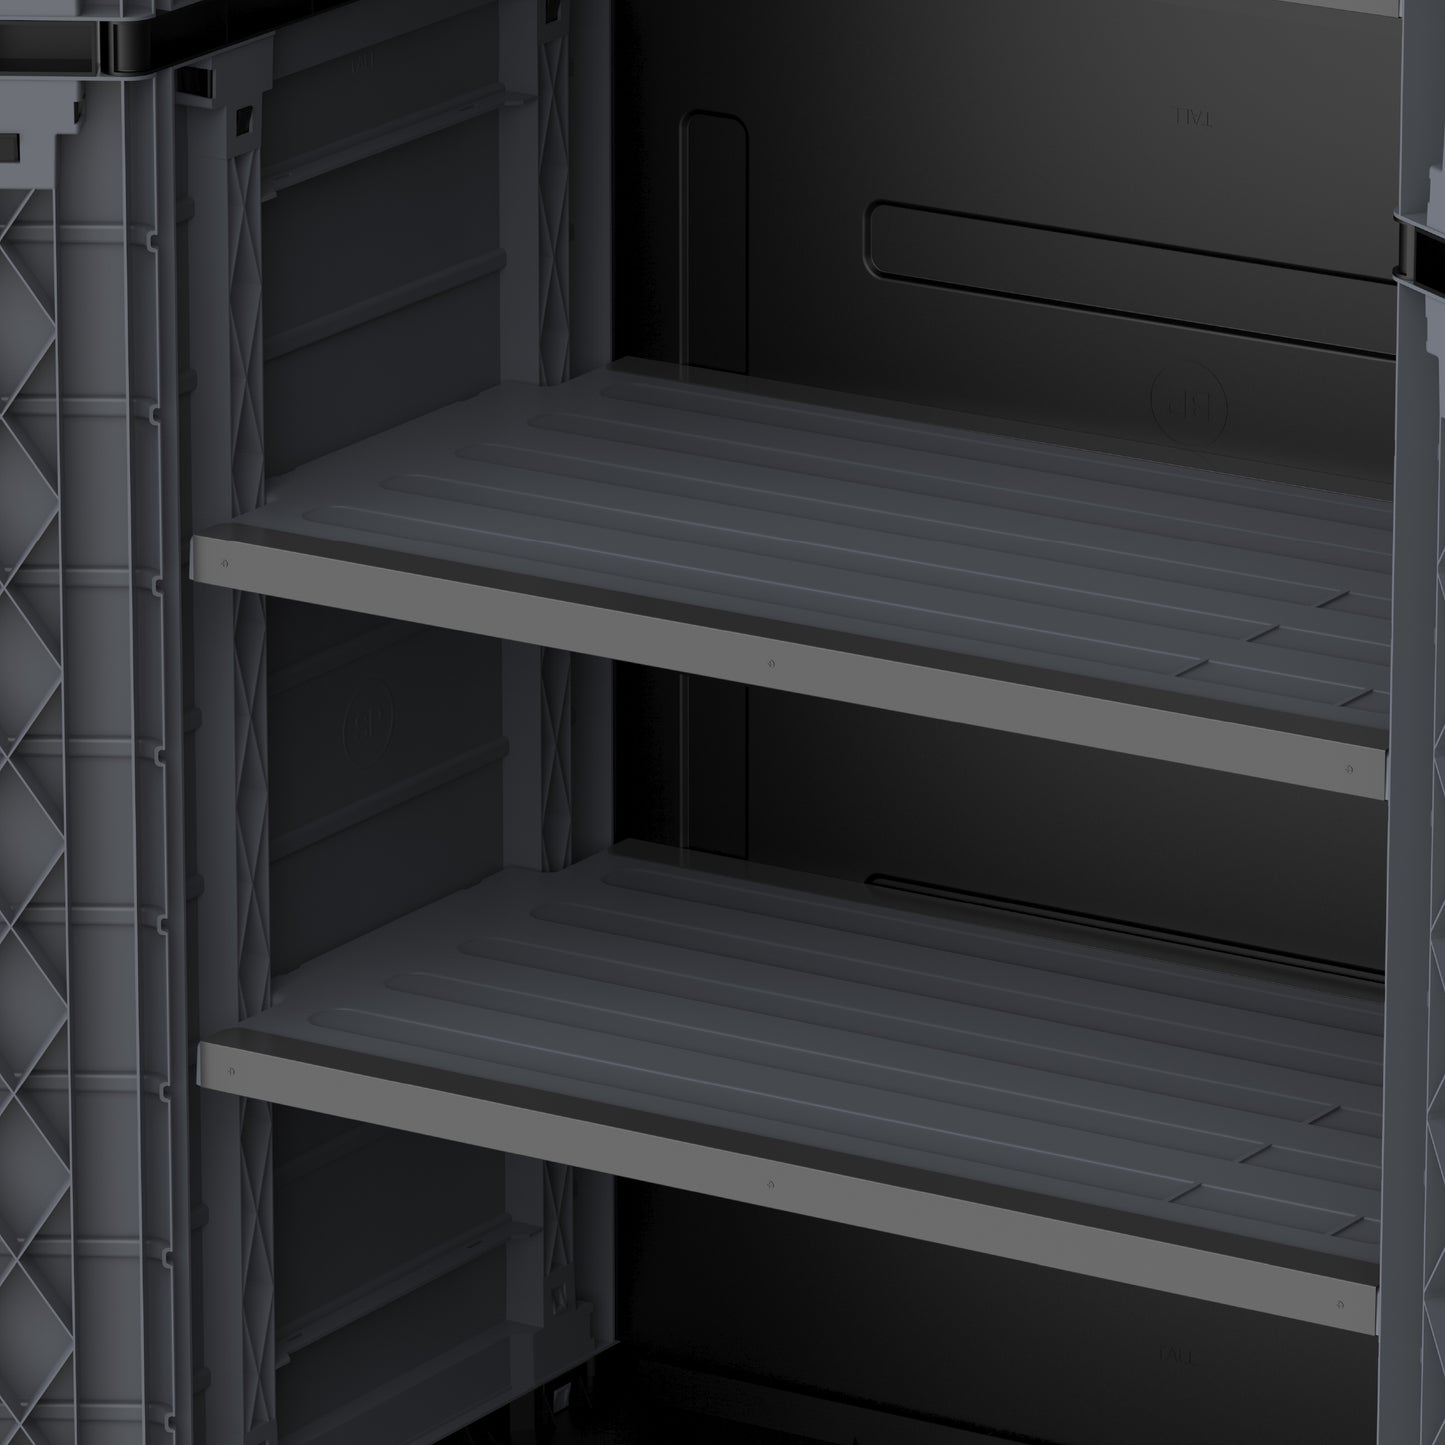 Duramax cedargrain tall storage cabinet with 4x adjustable shelves-grey